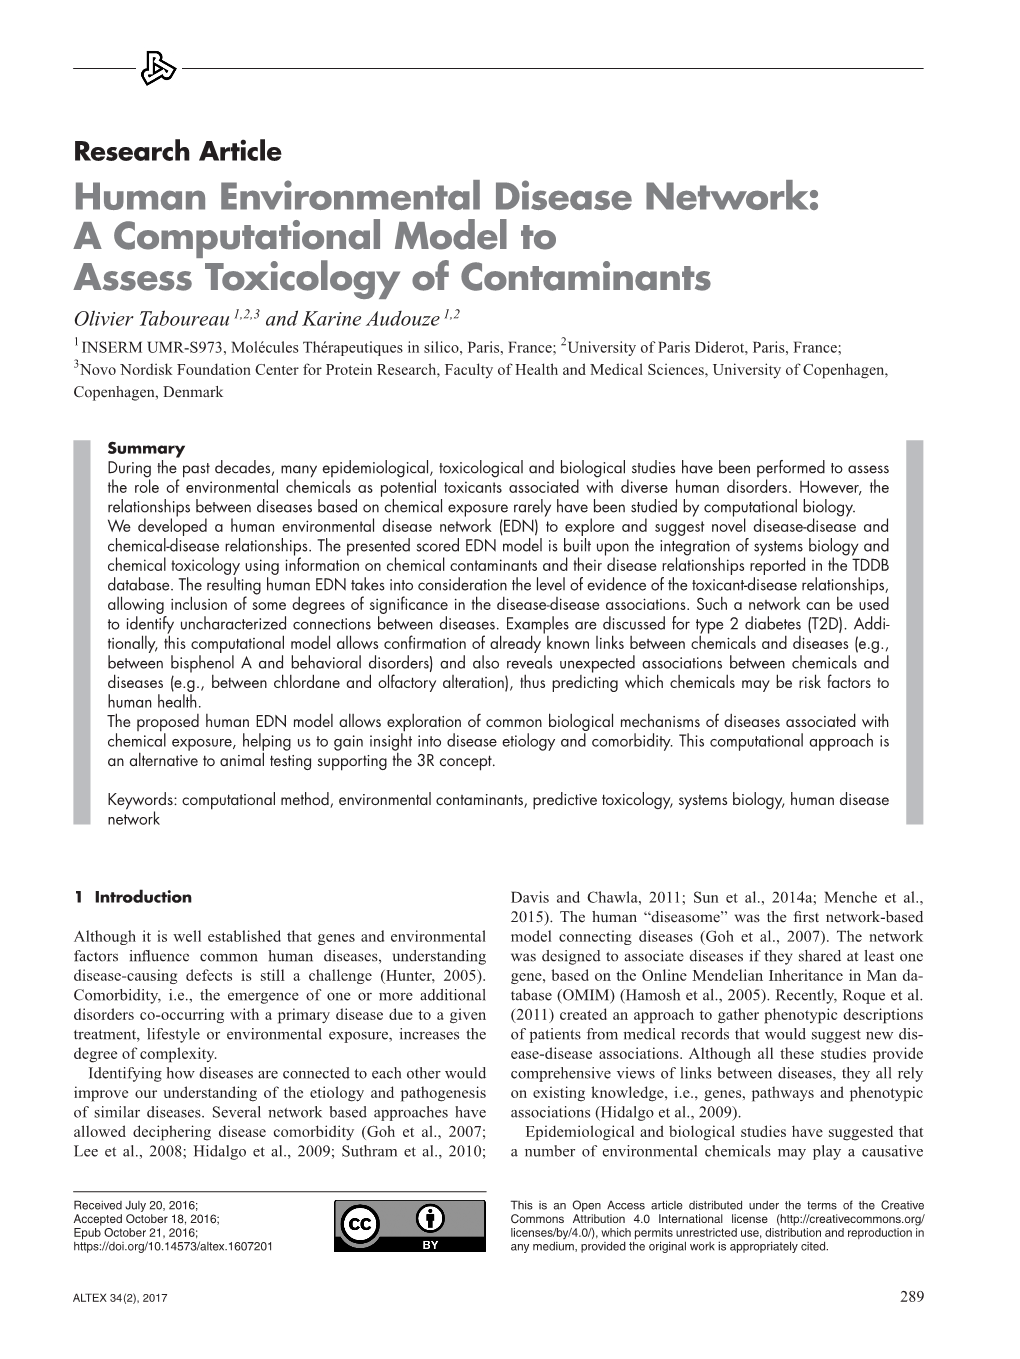 Human Environmental Disease Network